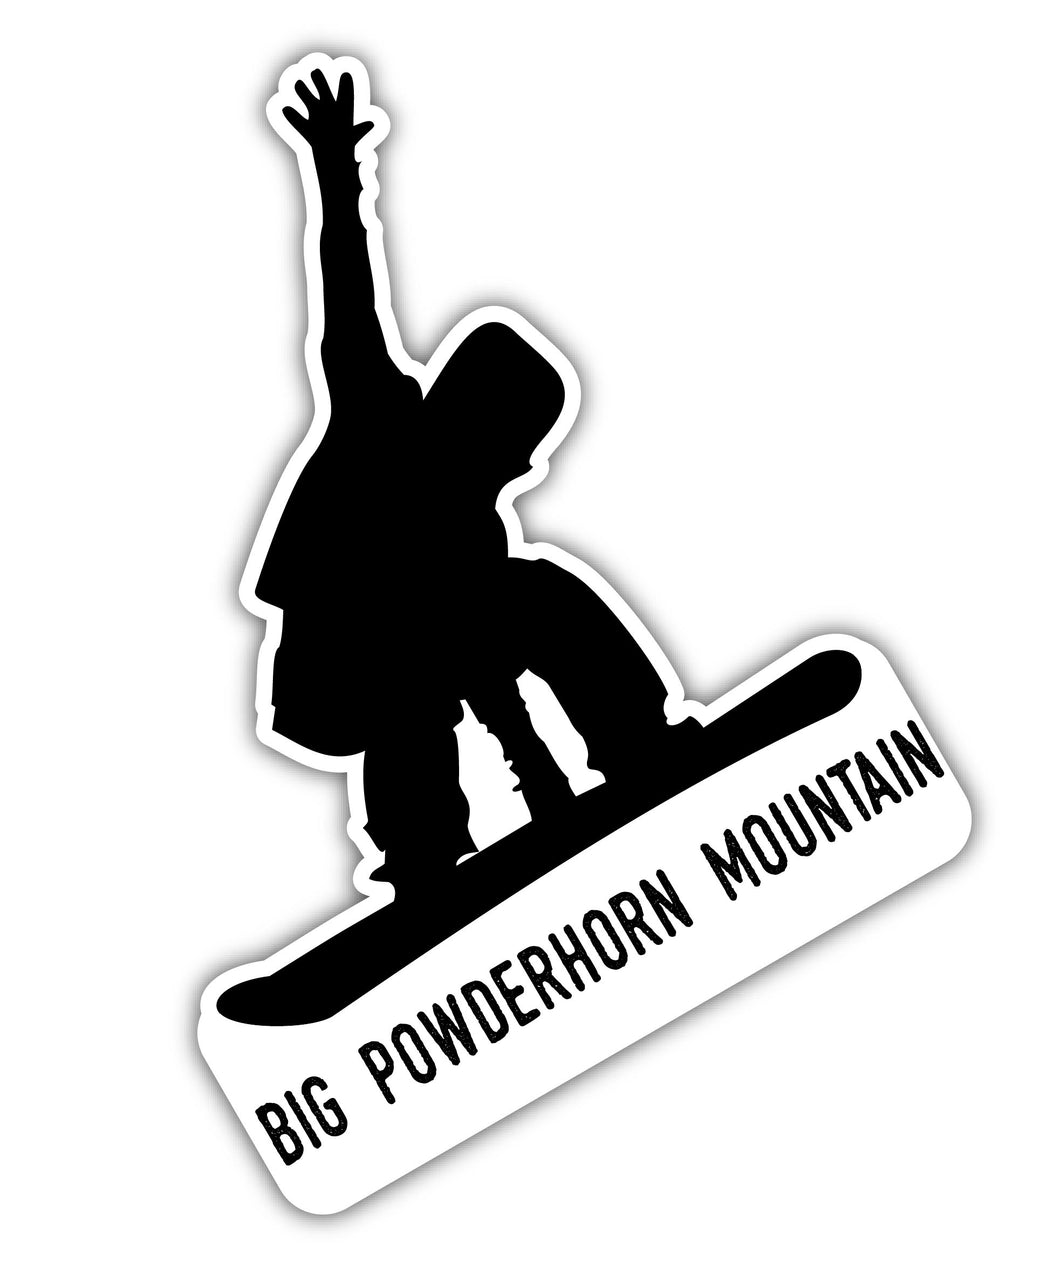 Big Powderhorn Mountain Michigan Ski Adventures Souvenir Approximately 5 x 2.5-Inch Vinyl Decal Sticker Goggle Design